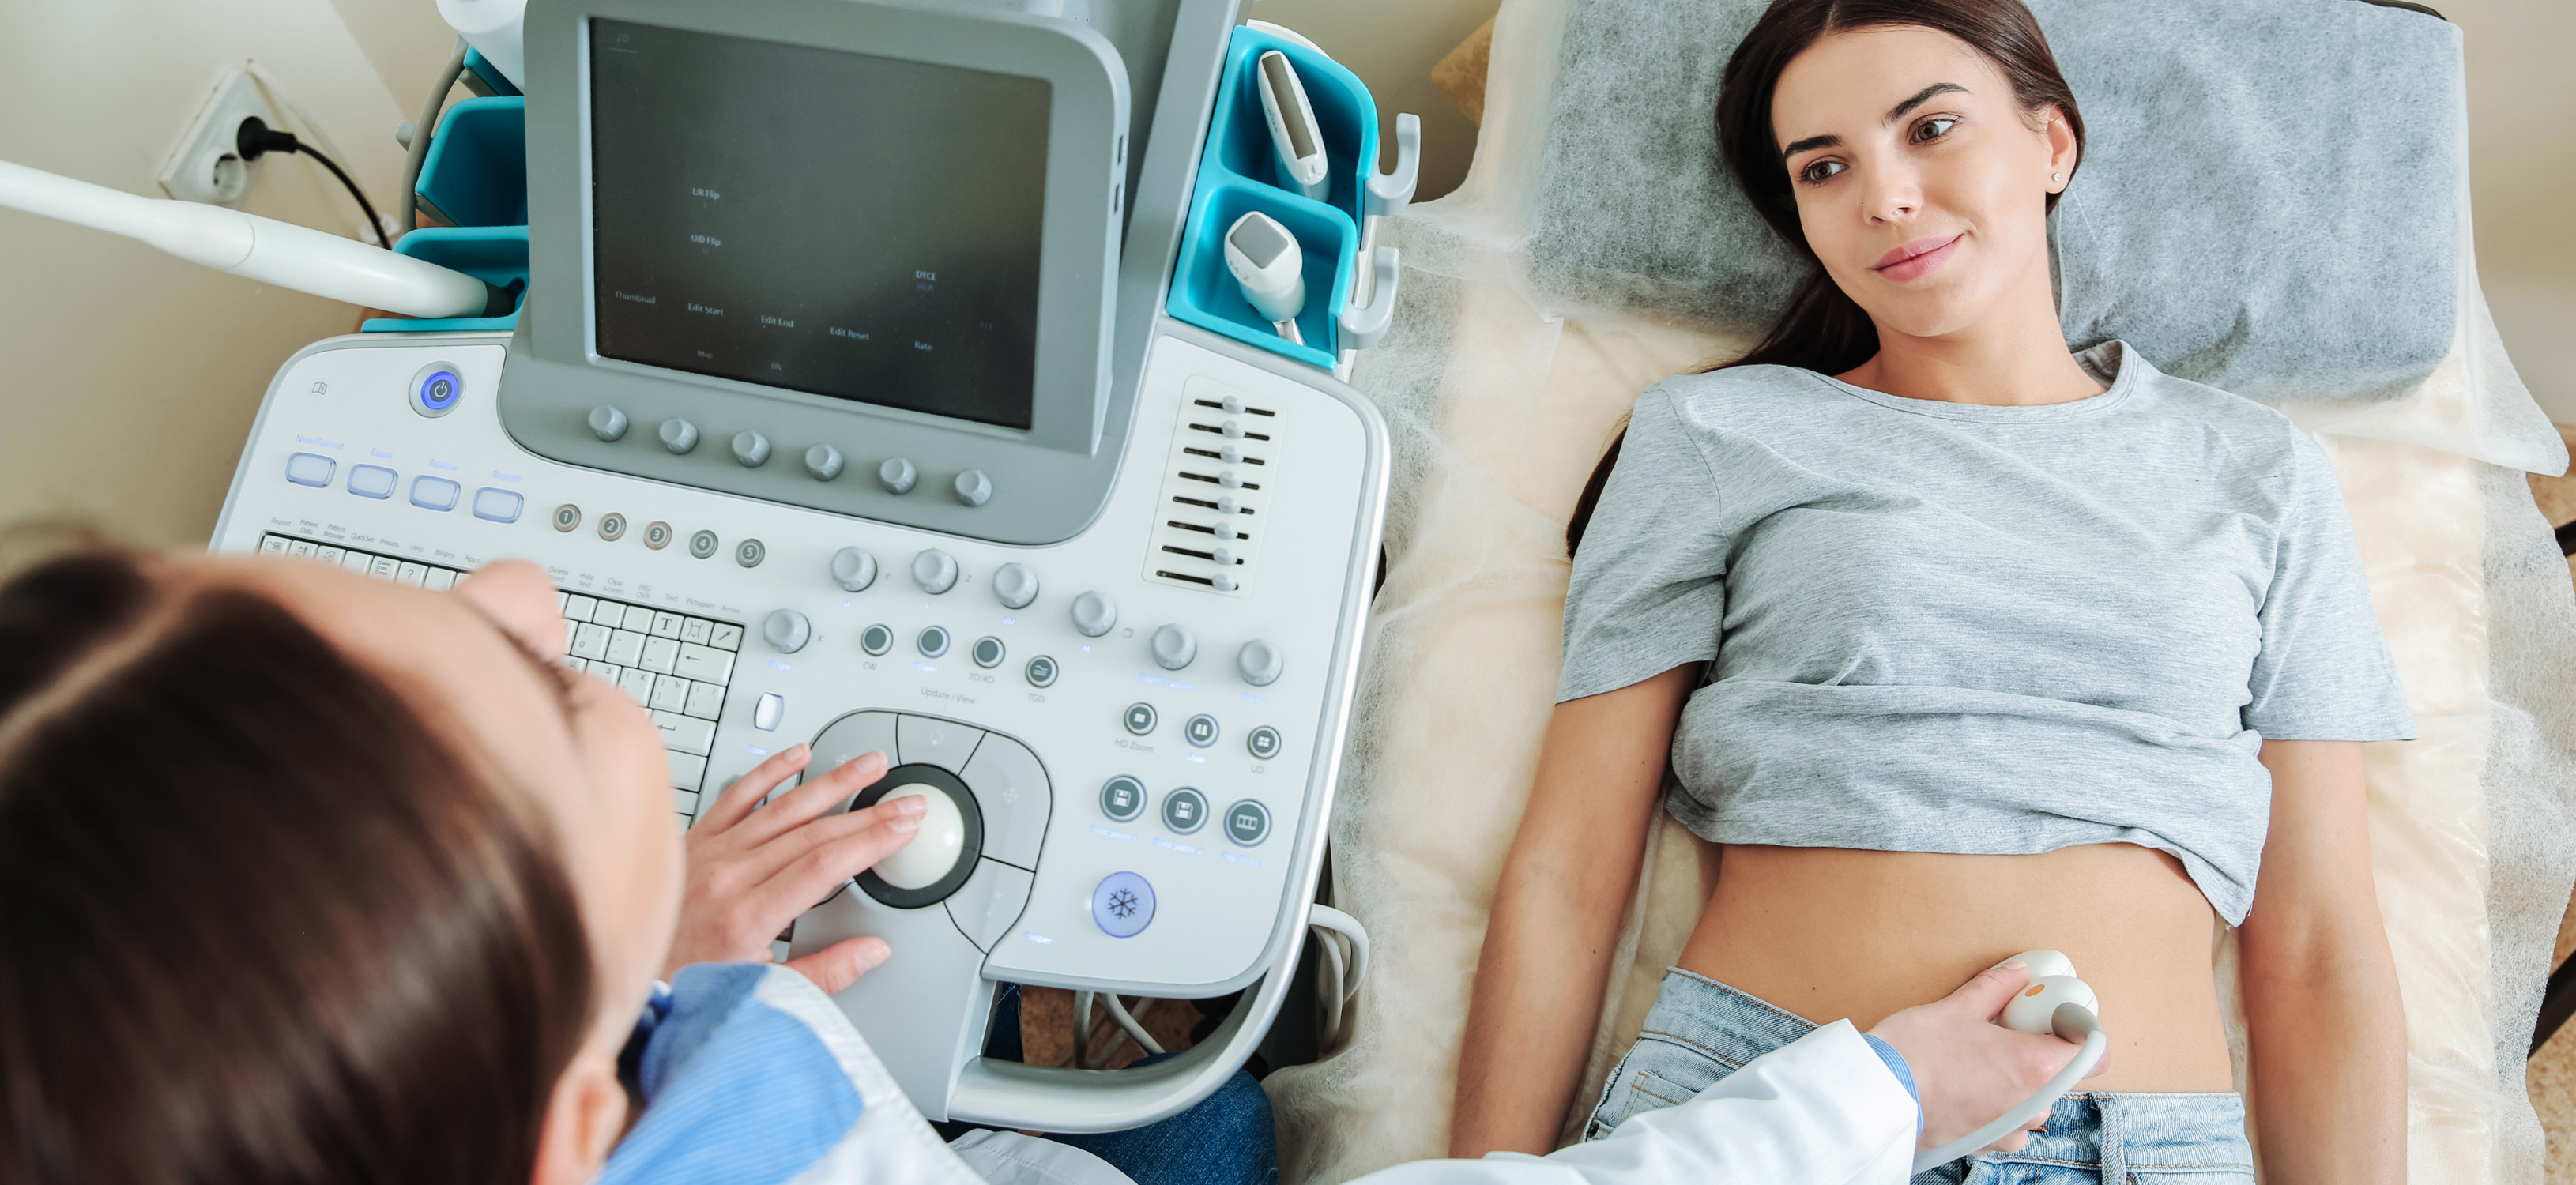 pelvic ultrasound scan